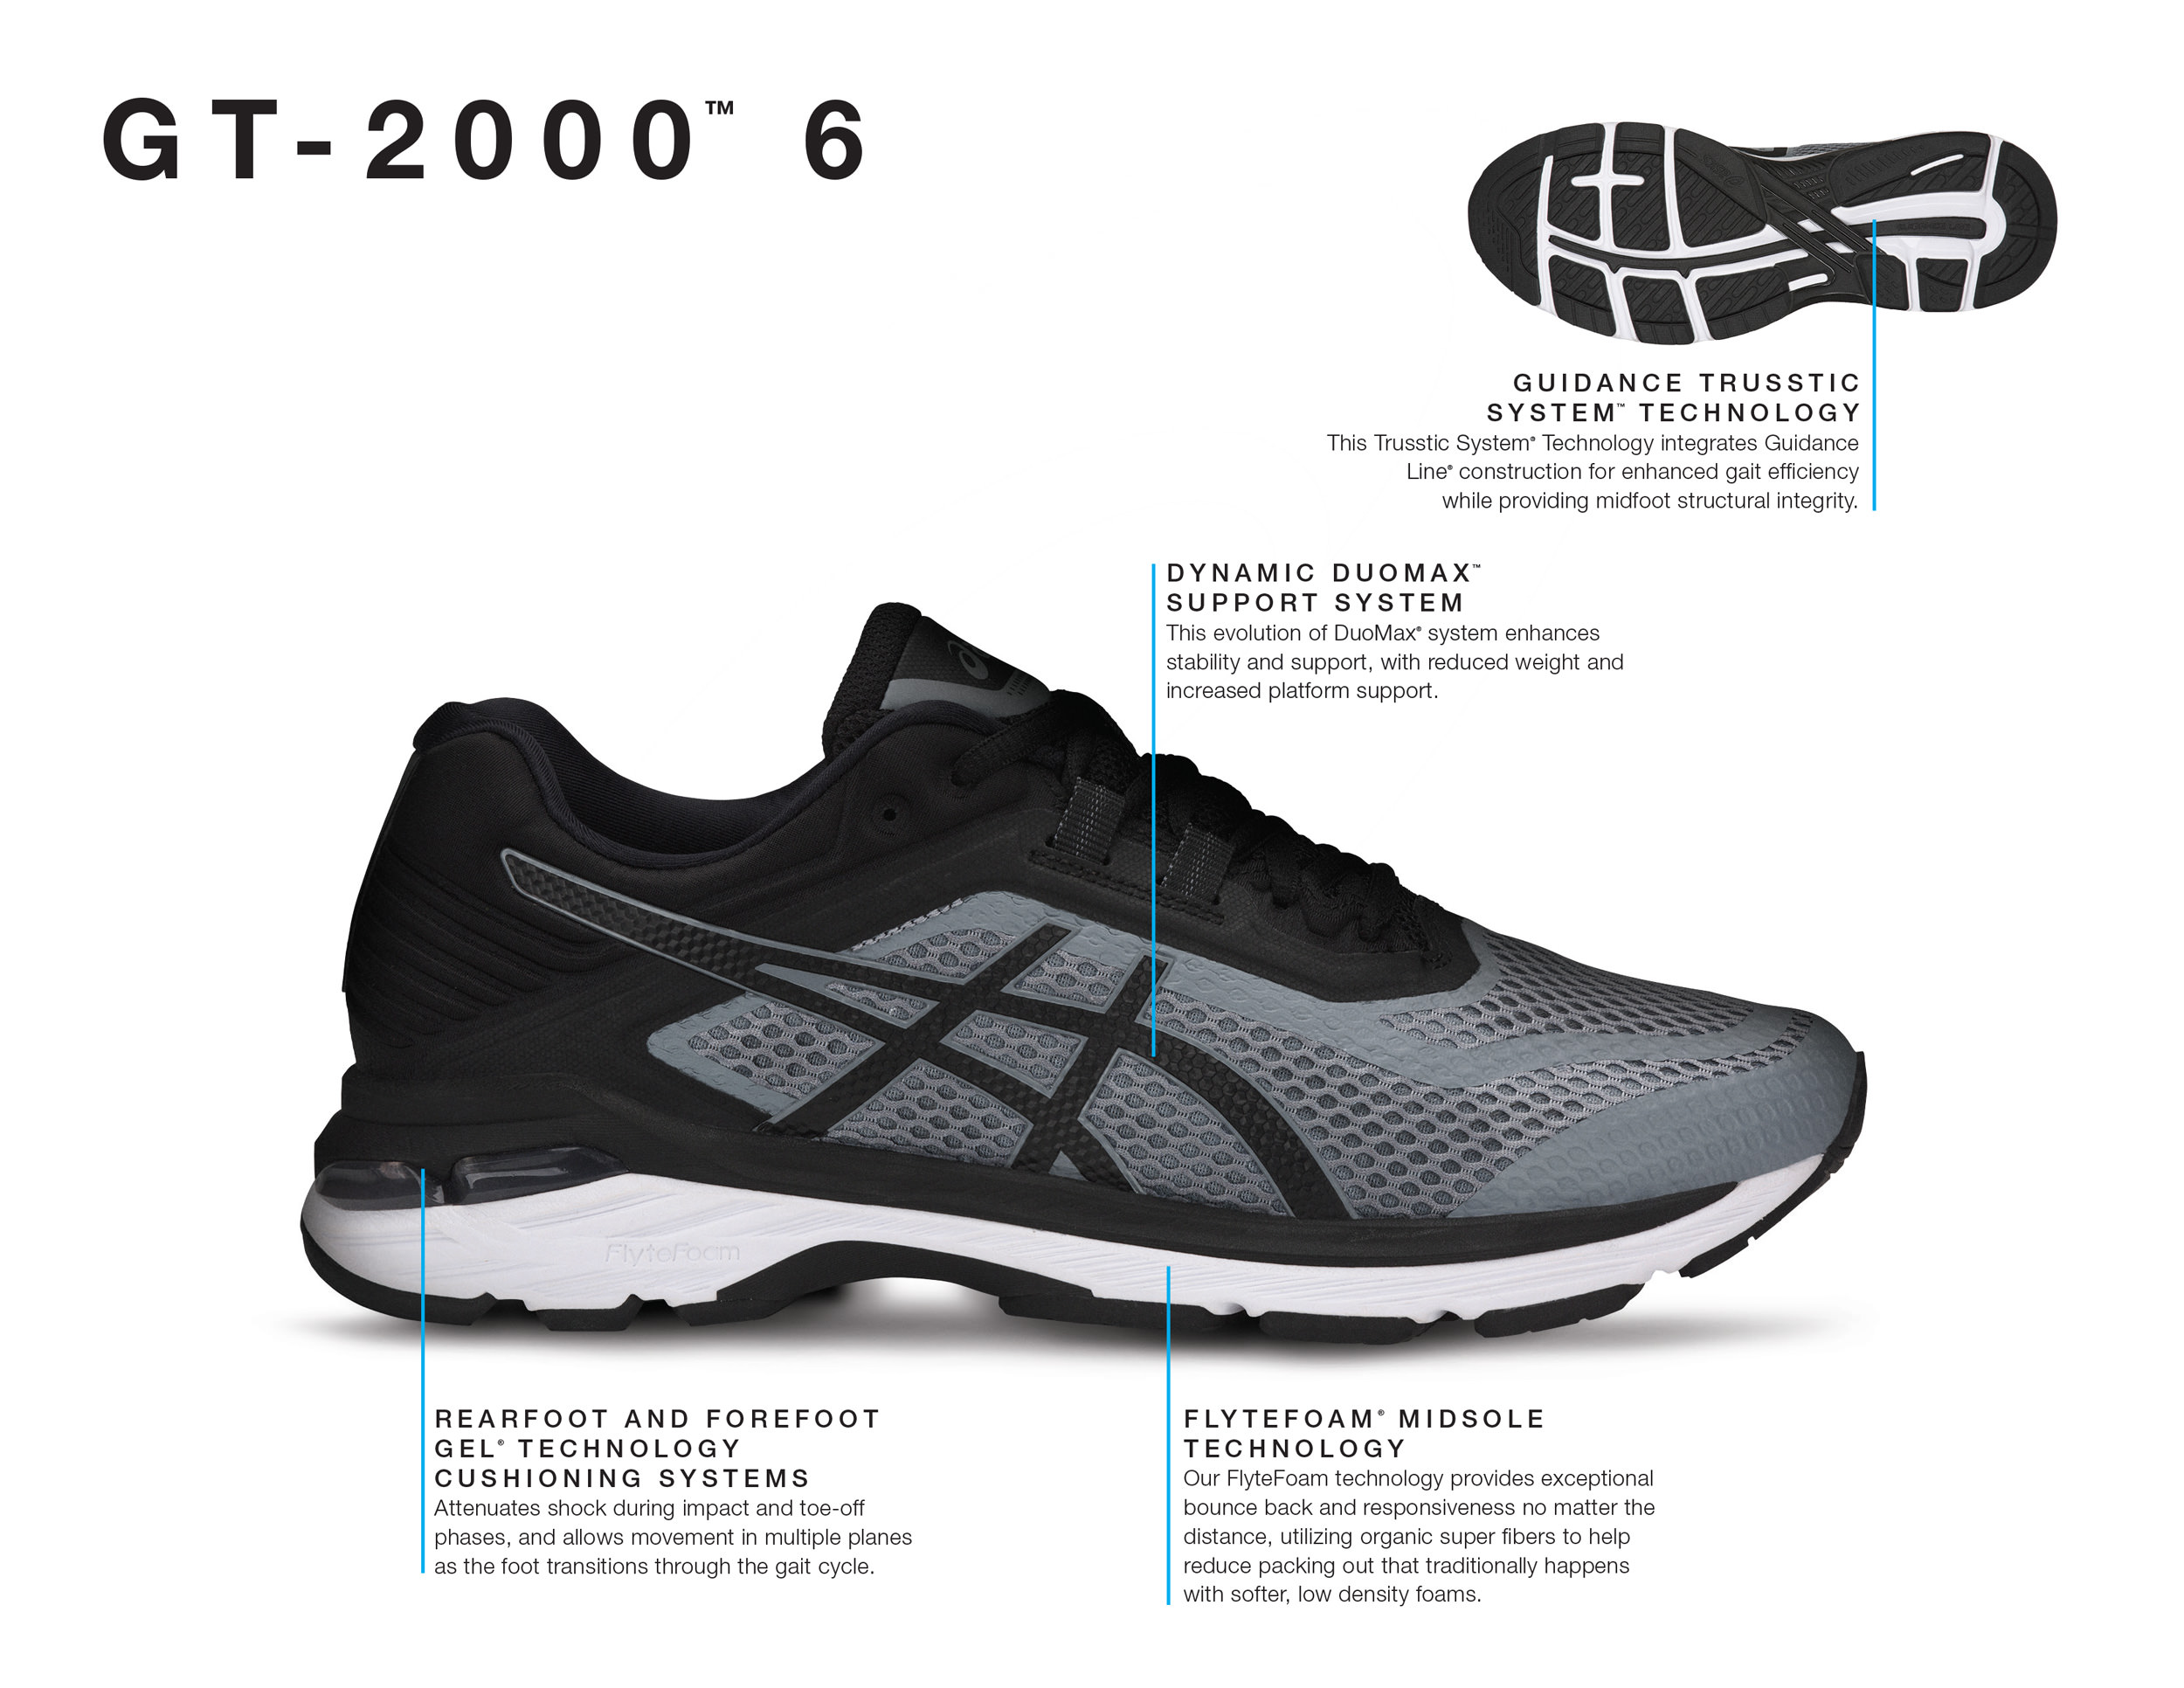 Shoe Review: Asics GT-2000 6 